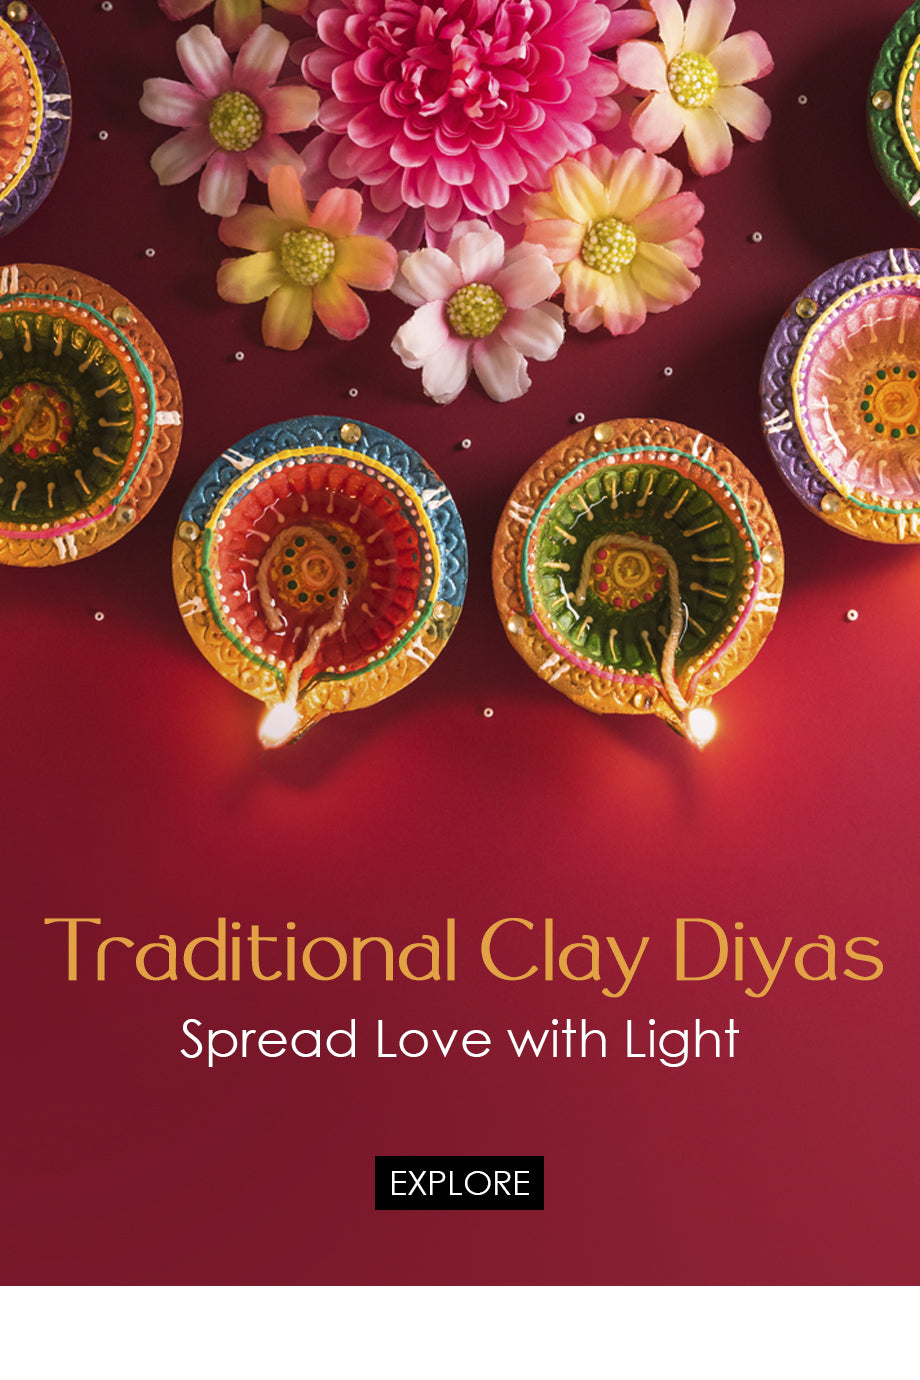 Shine Bright: Diwali Light Decoration Ideas for a Festi